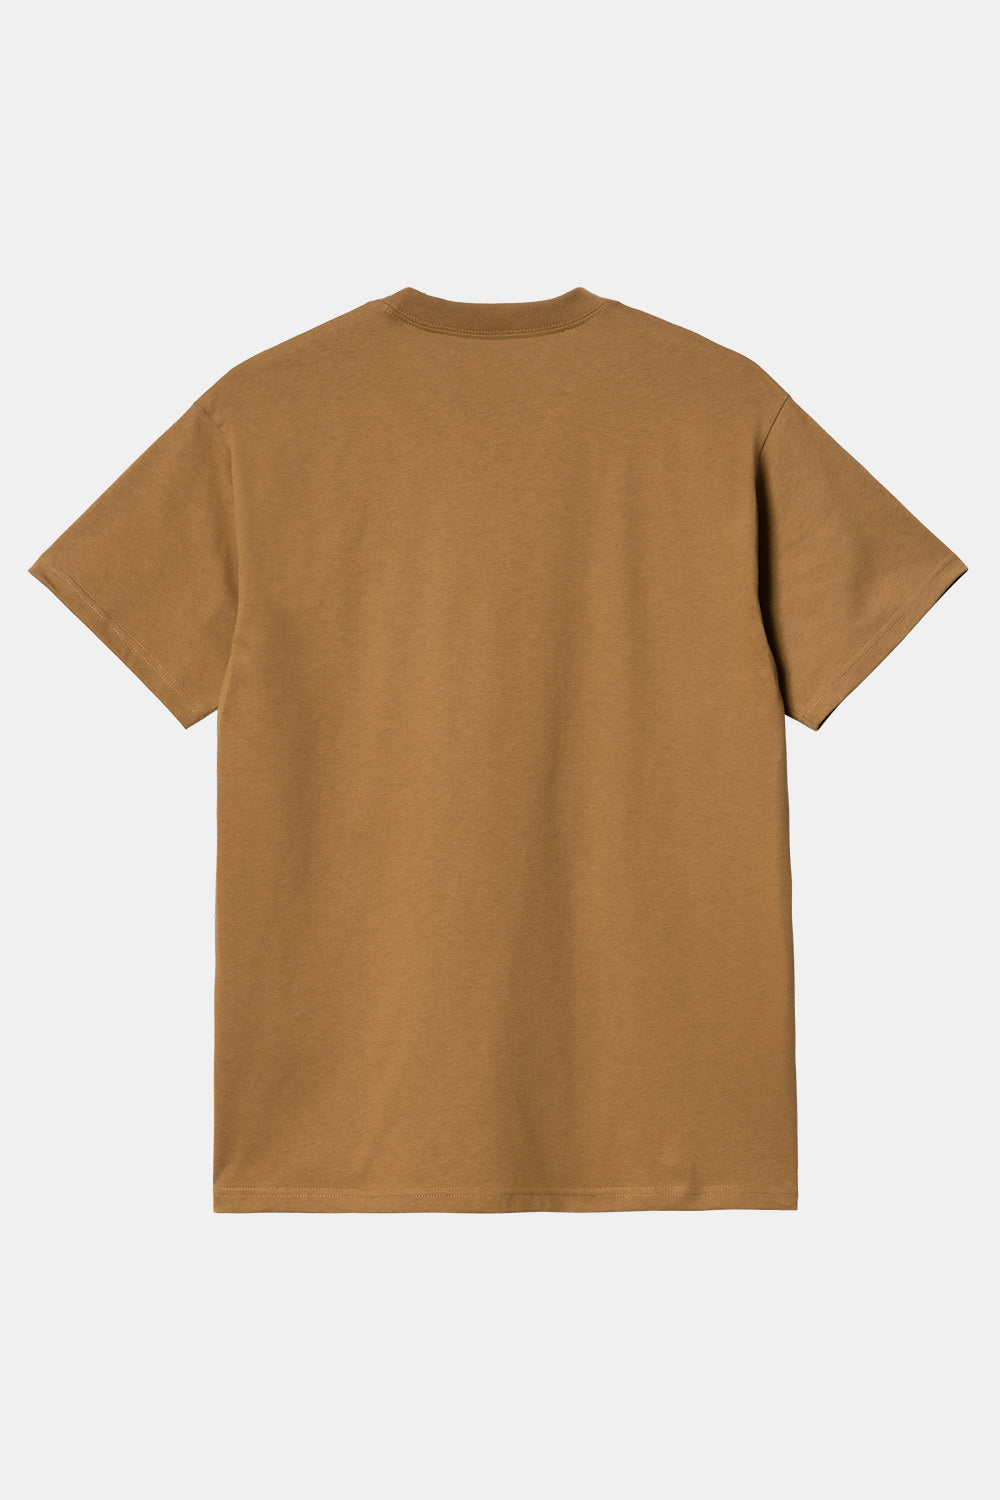 Carhartt WIP Short Sleeve Icons T-Shirt (Hamilton Brown/Black)